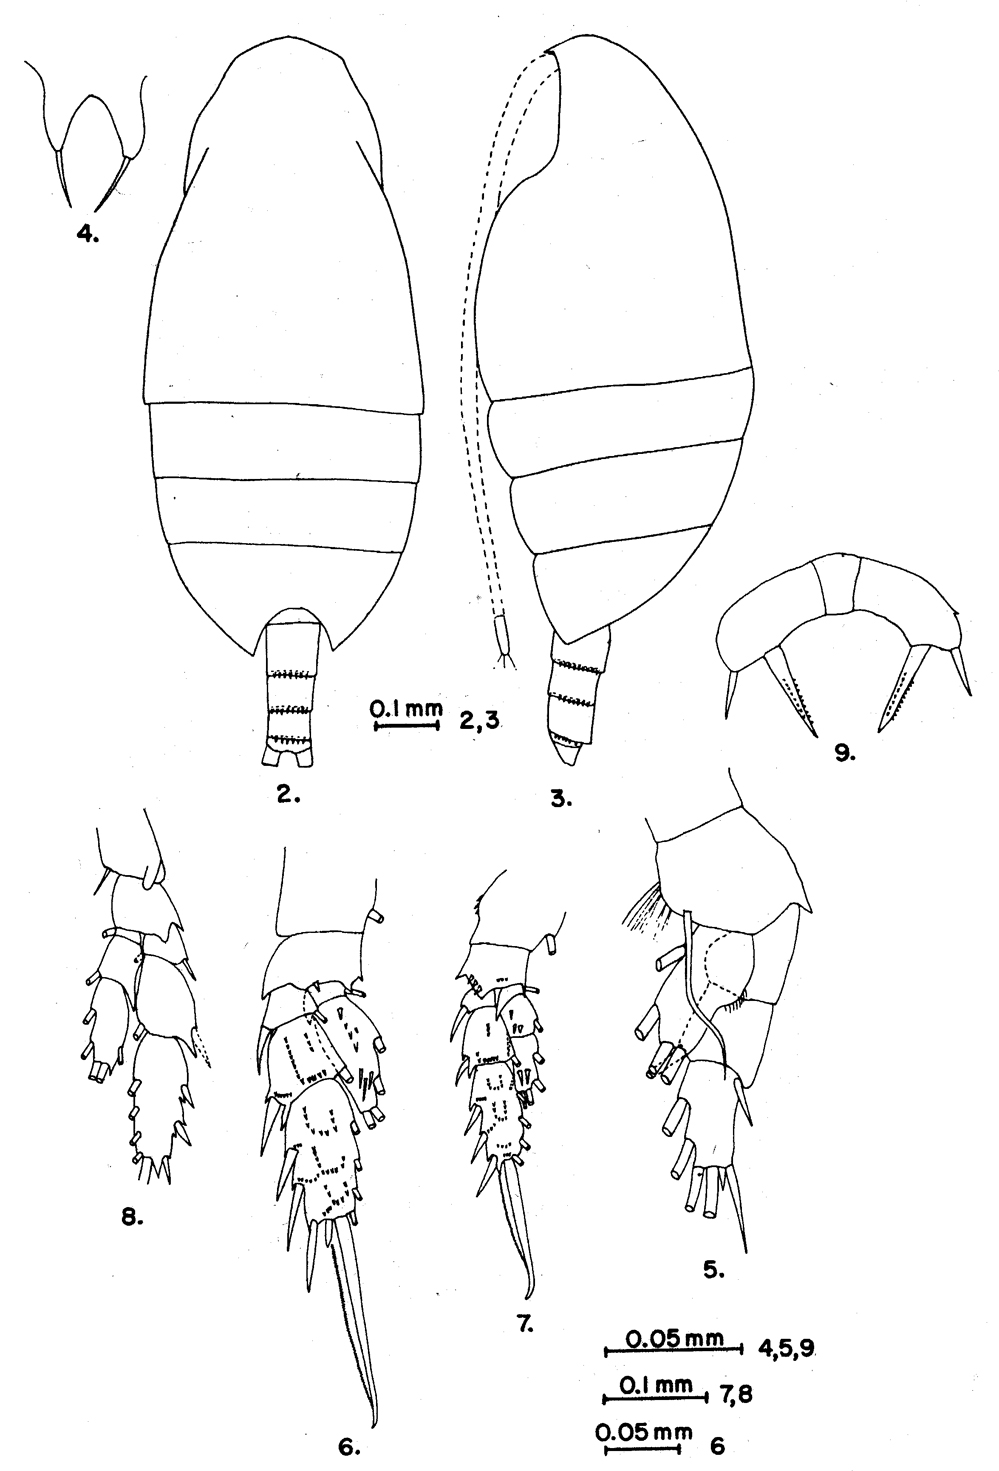 Species Scolecithricella marginata - Plate 4 of morphological figures